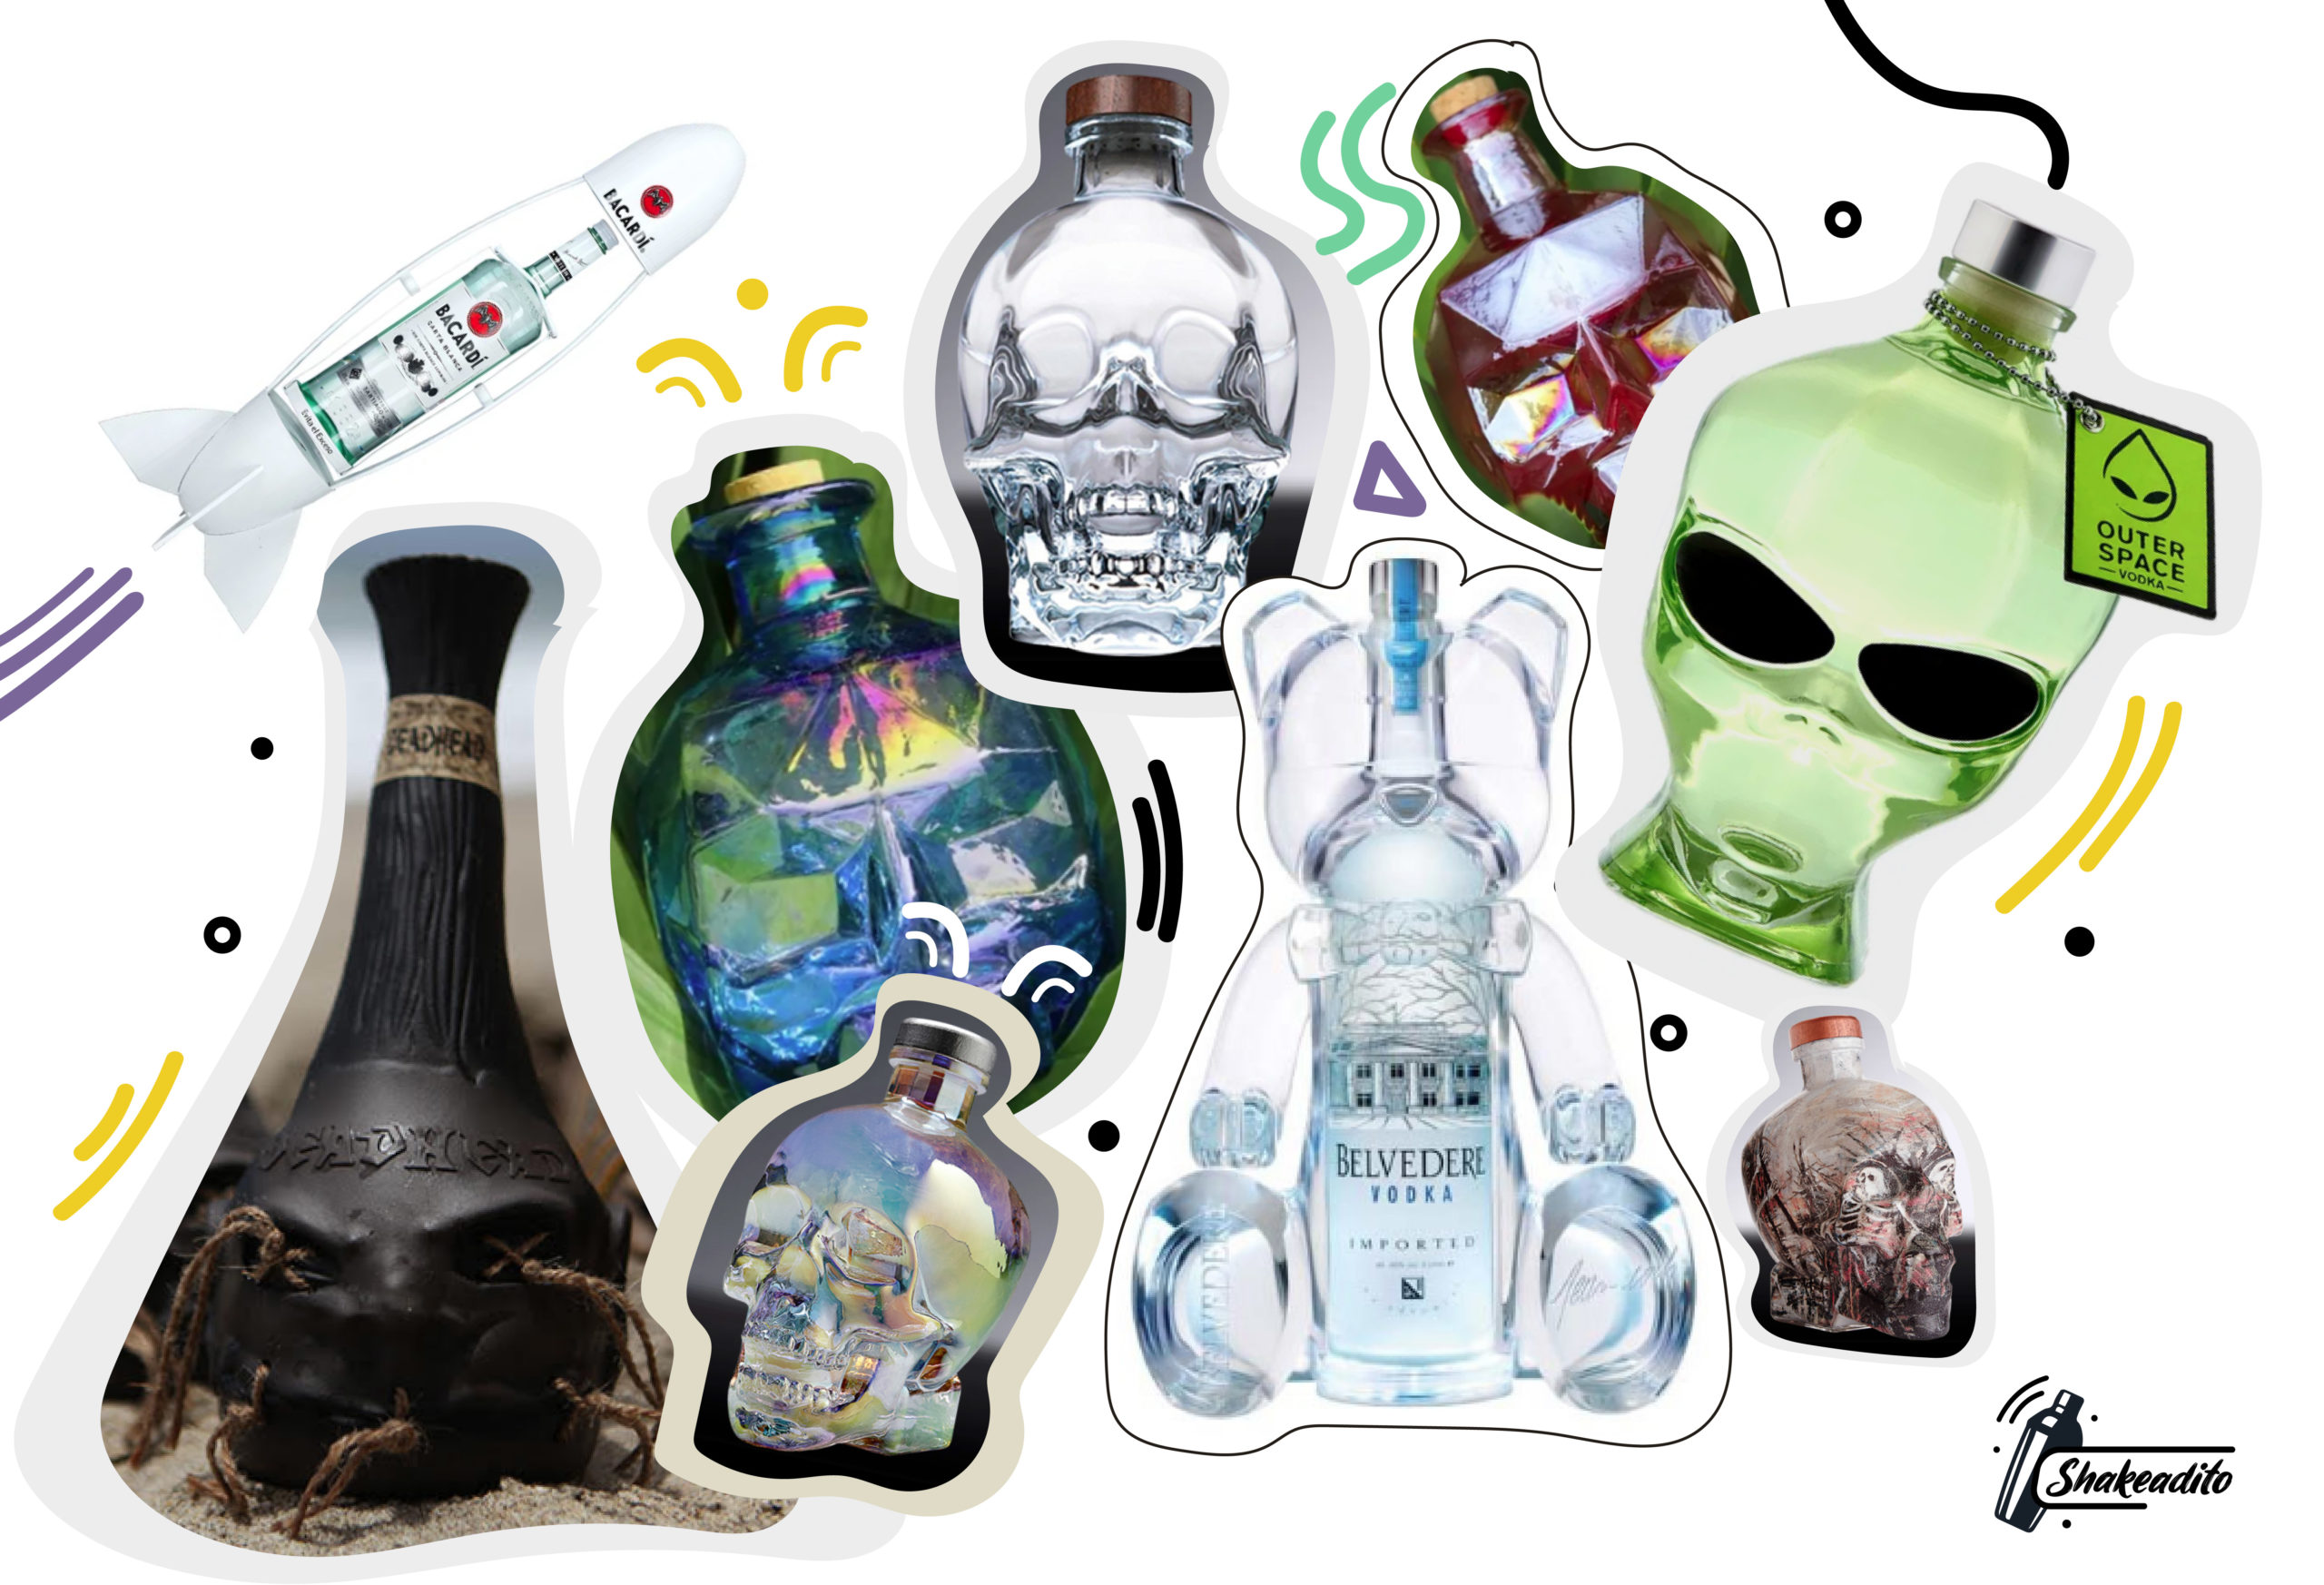 Tus botellas favoritas, en presentación miniatura - Shakeadito